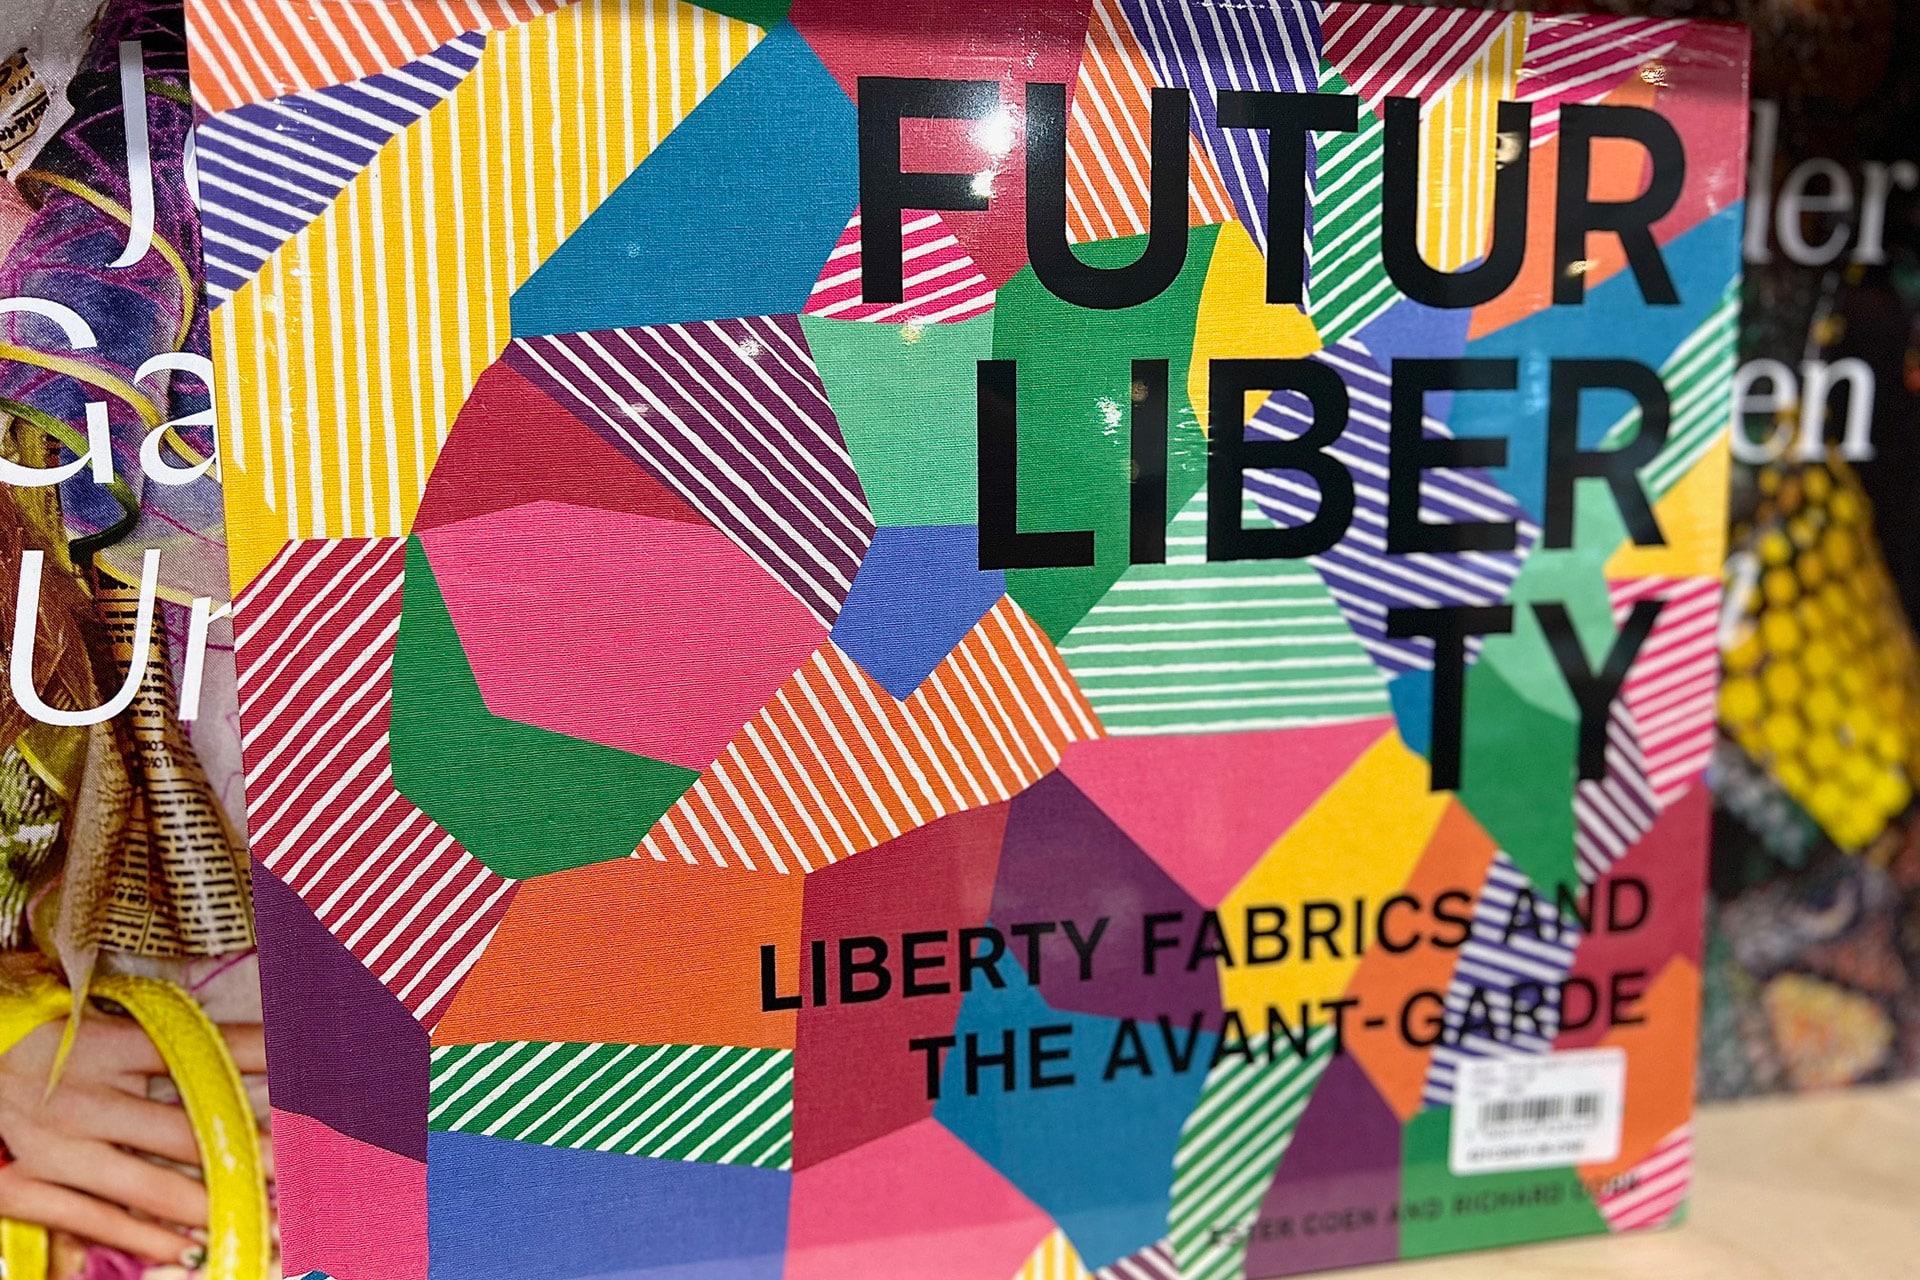 FuturLiberty: Liberty fabrics and the Avant-Garde